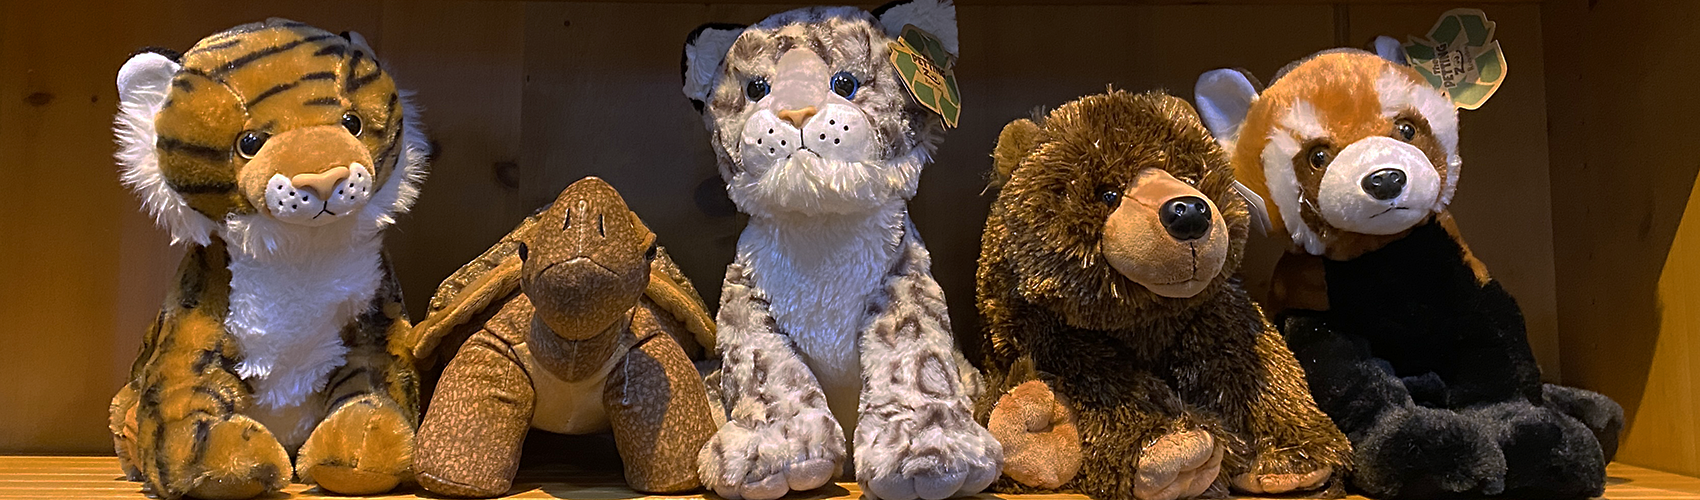 Stuffed animals - tiger, tortoise, snow leopard, bear, red panda